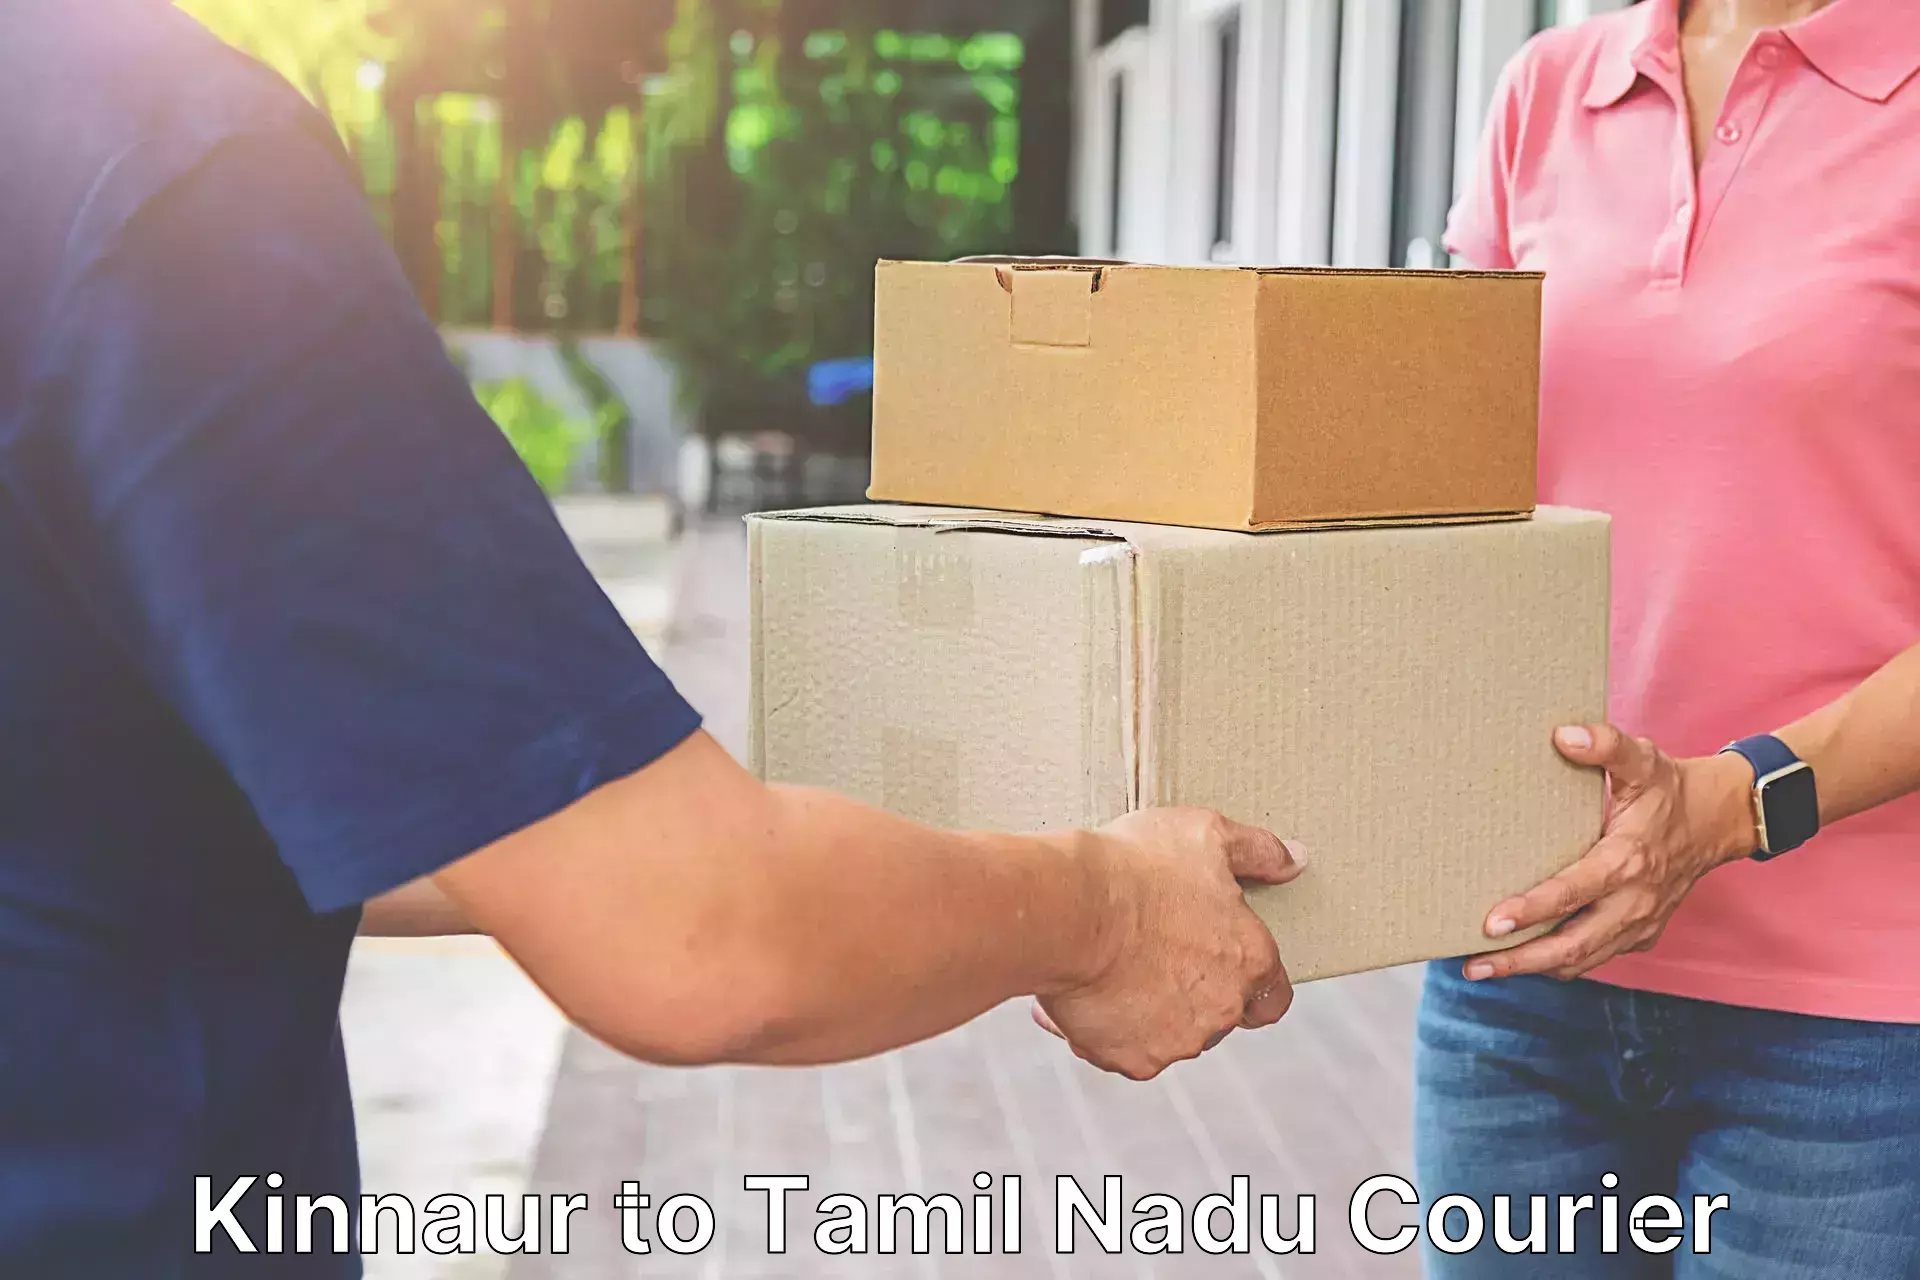 Business delivery service Kinnaur to Madurai